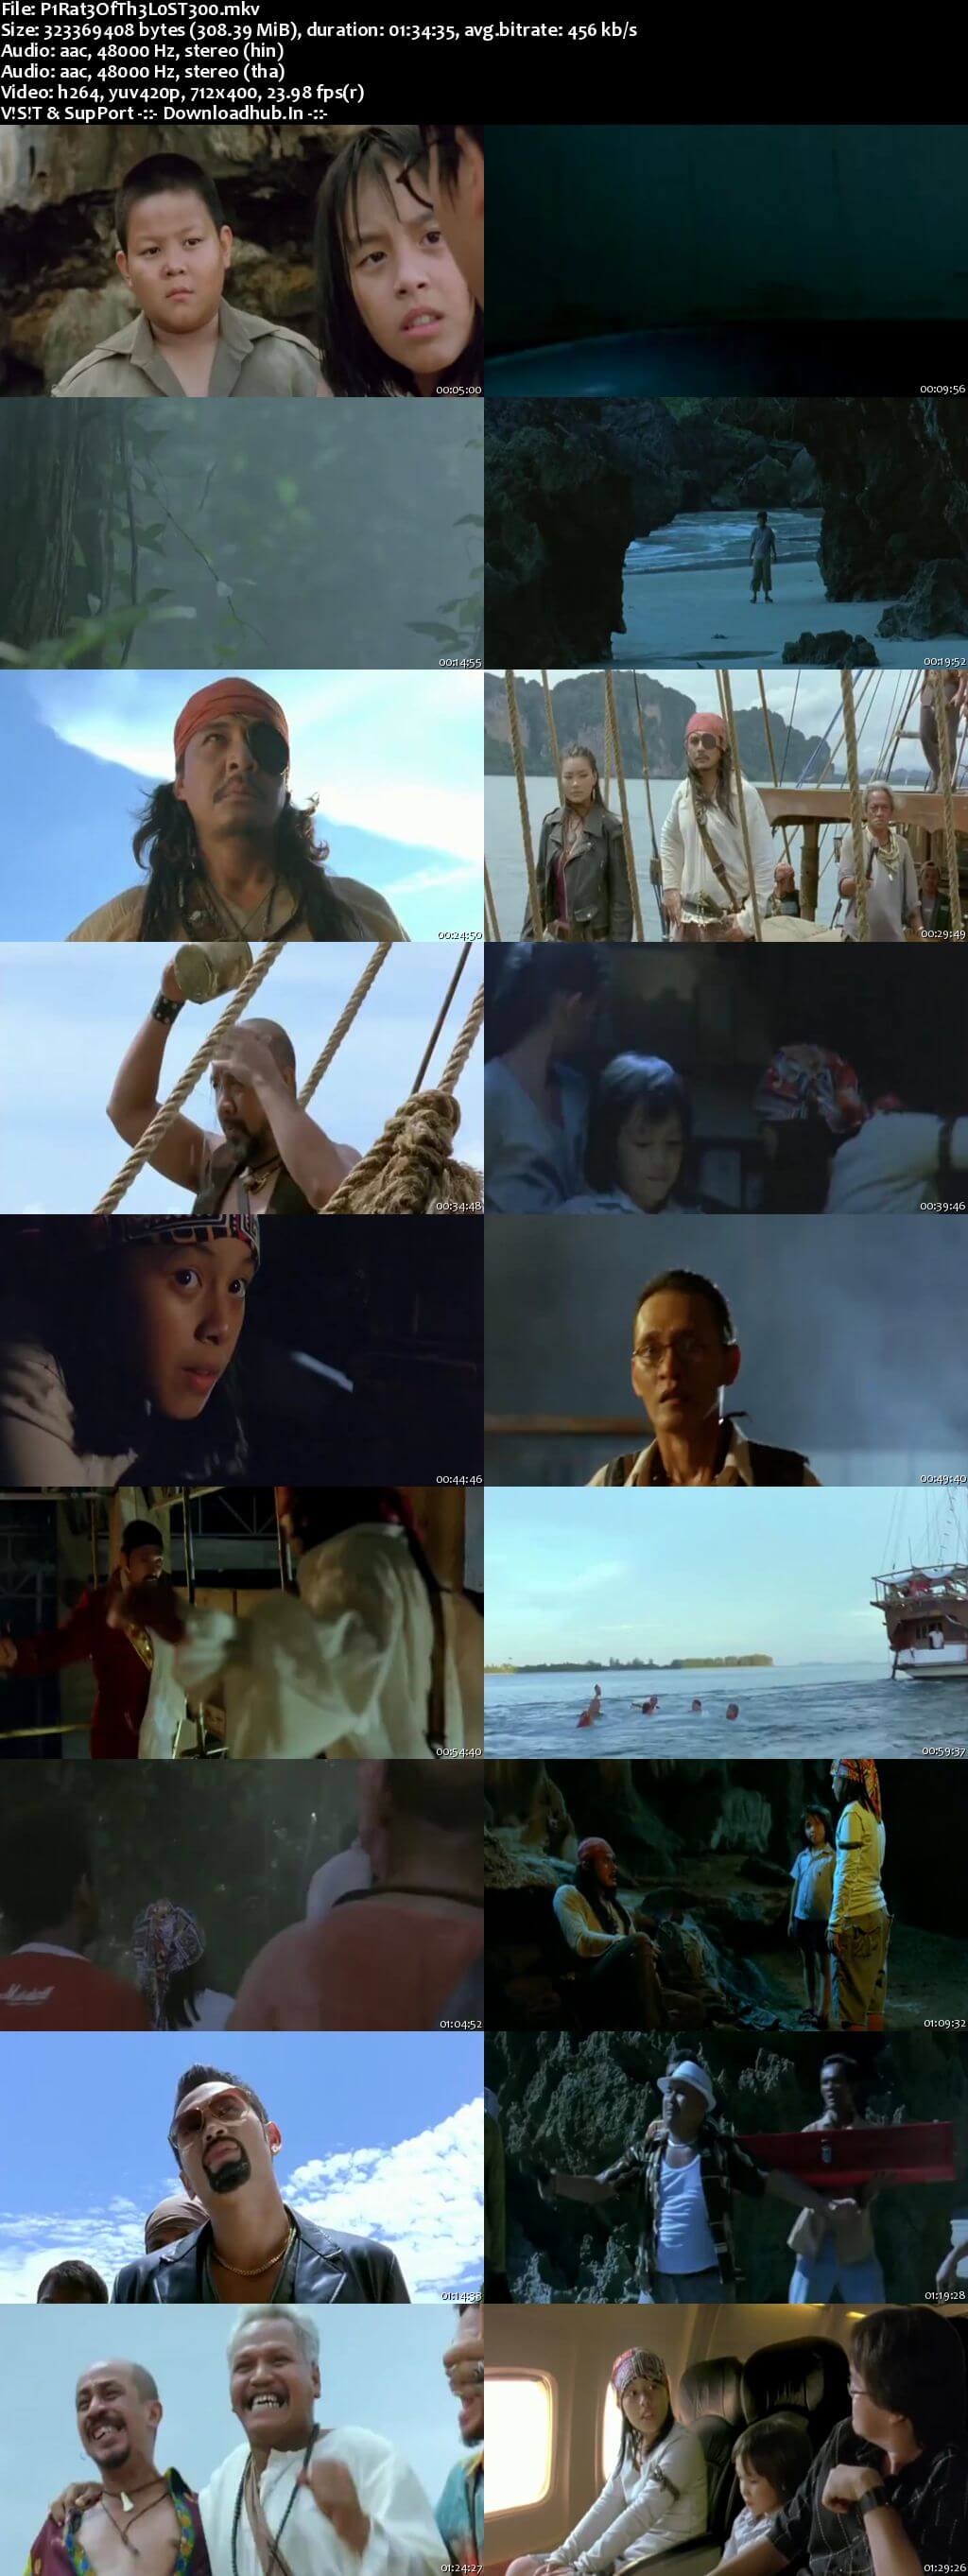 download pirate 2005 movie